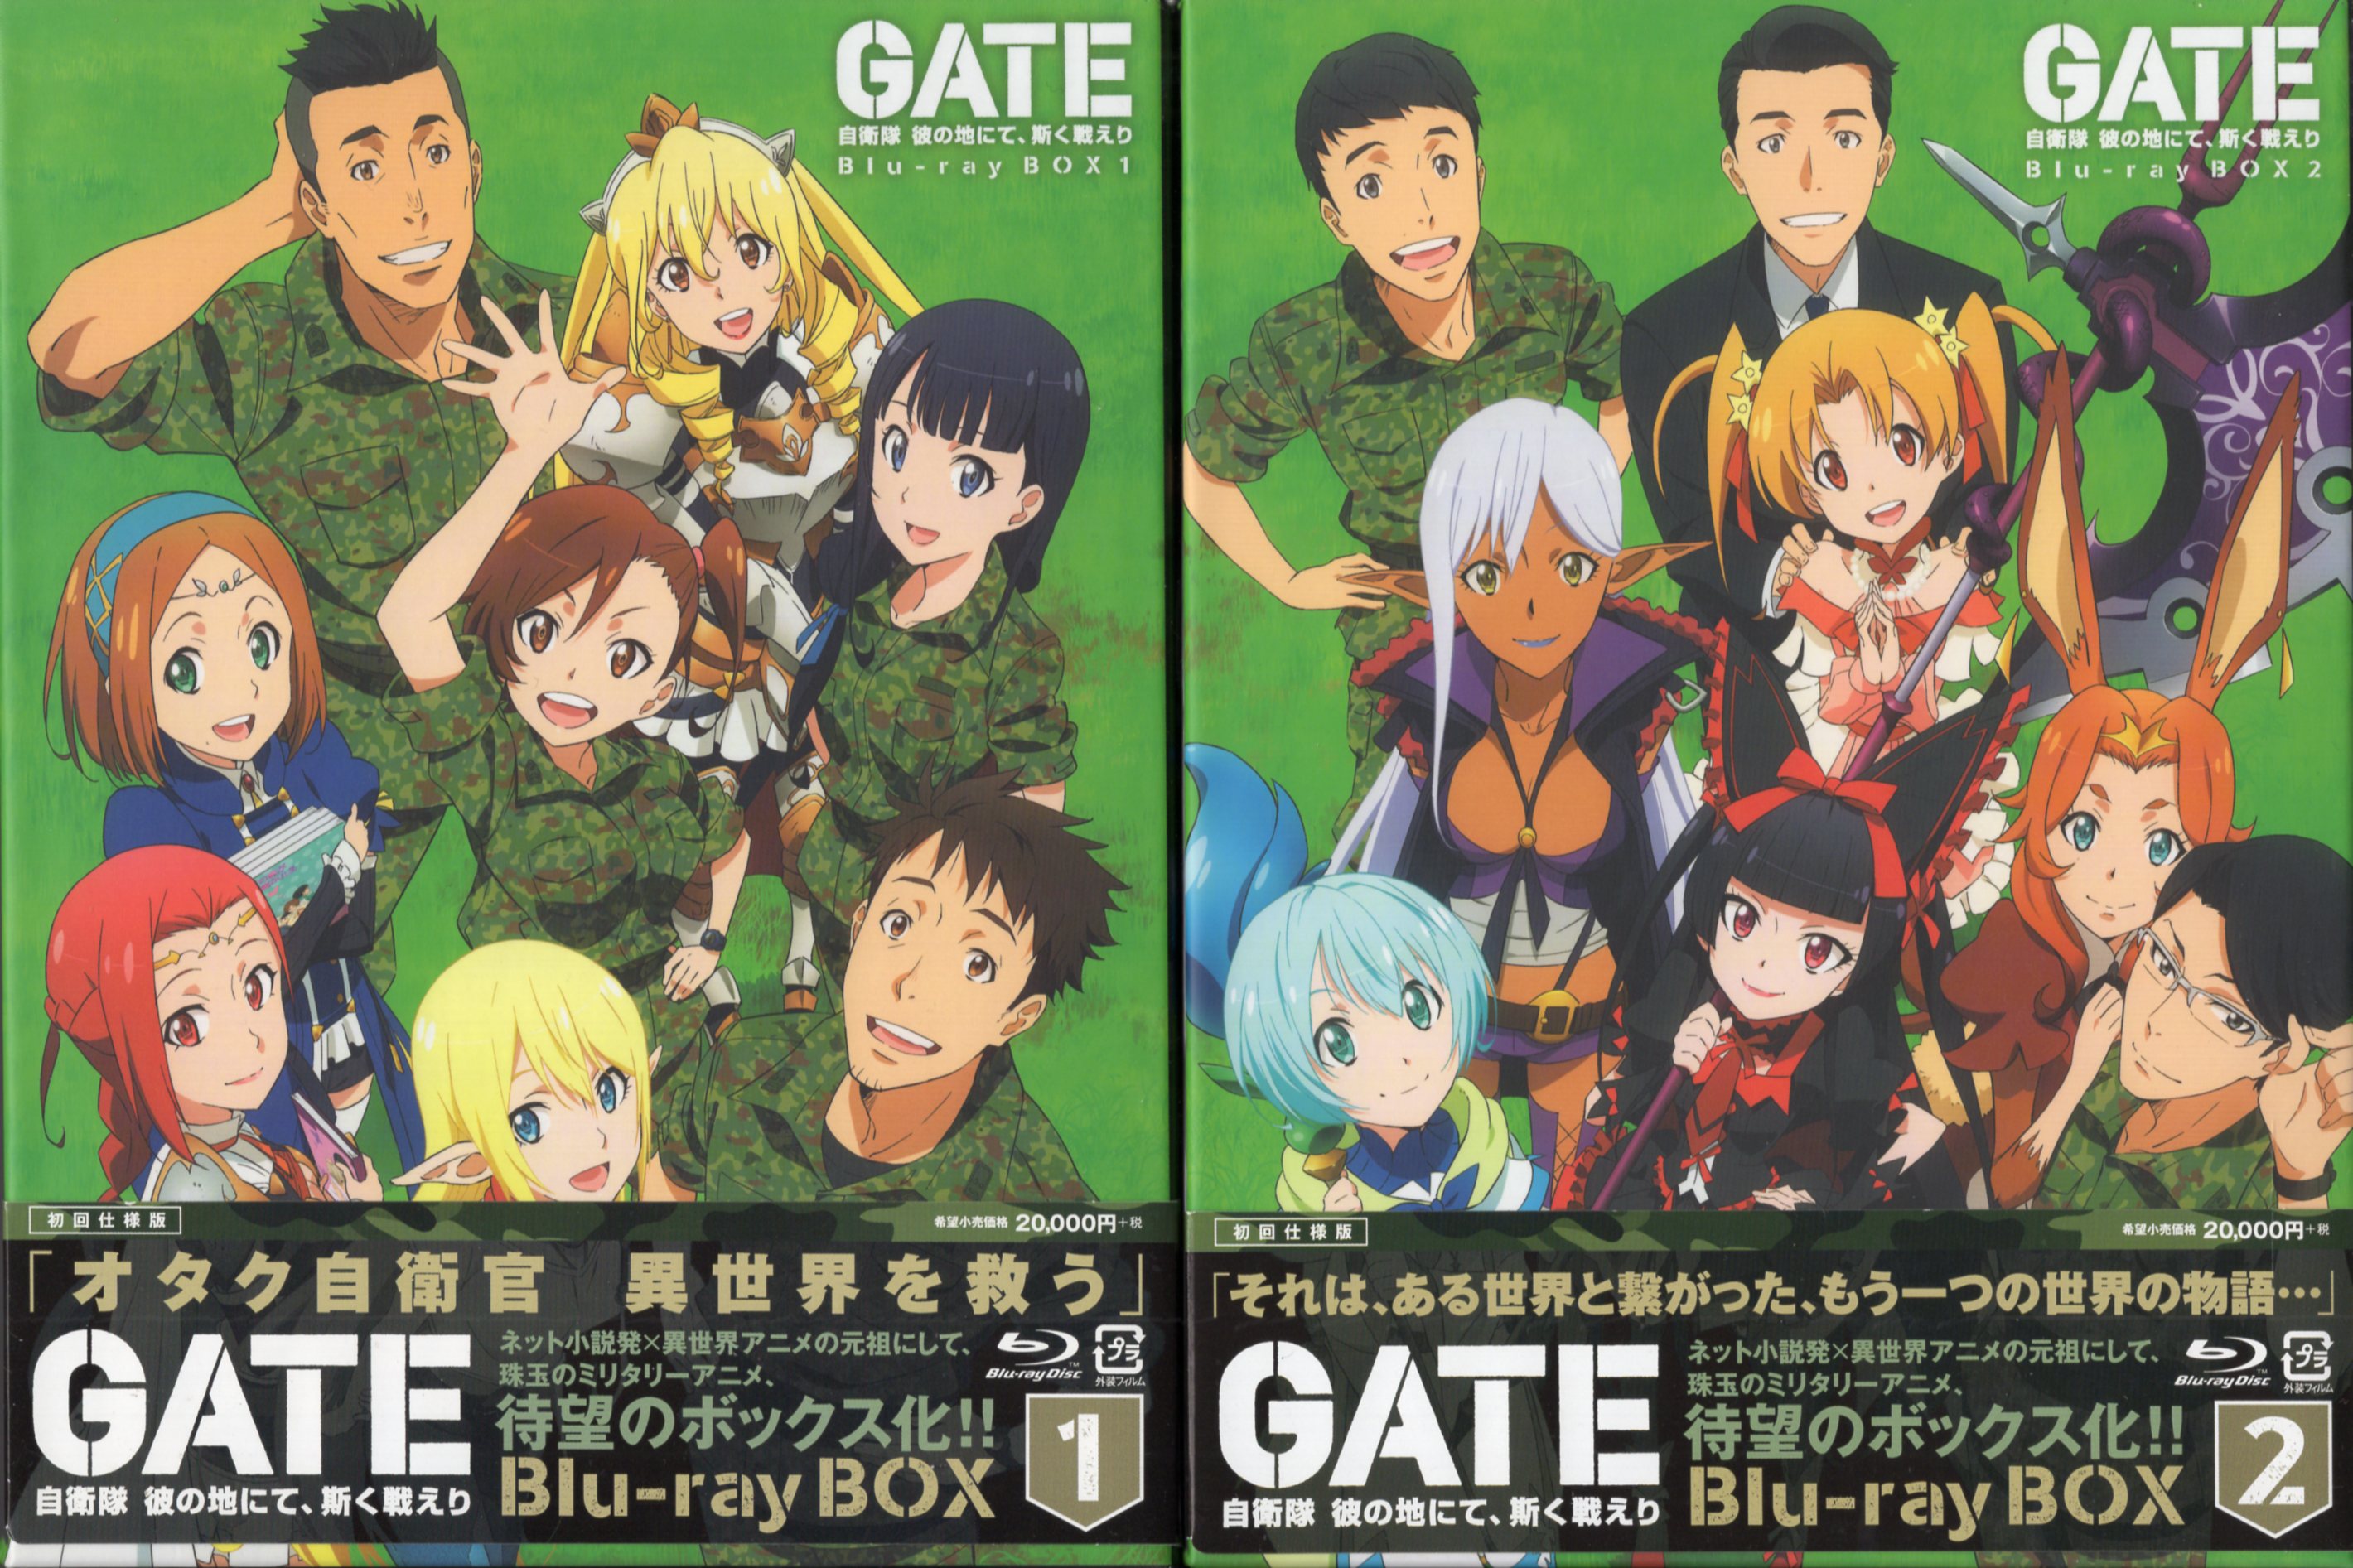 Comic: GATE: Jieitai Kano Chi nite, Kaku Tatakaeri 9 (Japan(GATE